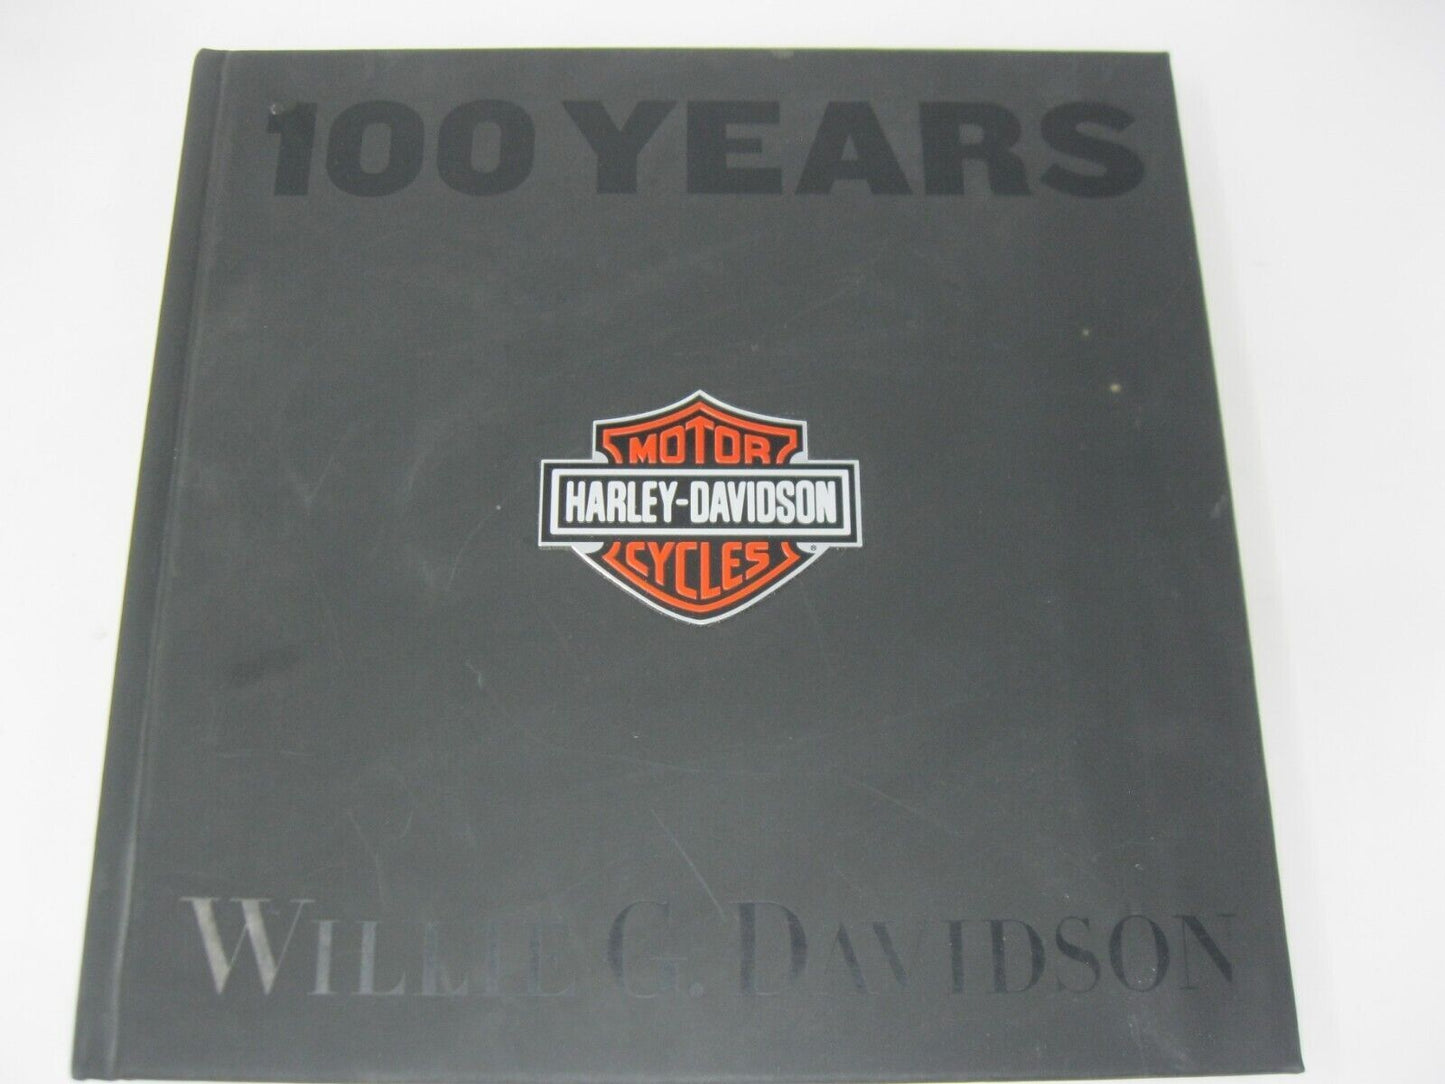 100 Years of Harley-Davidson by Willie G. Davidson